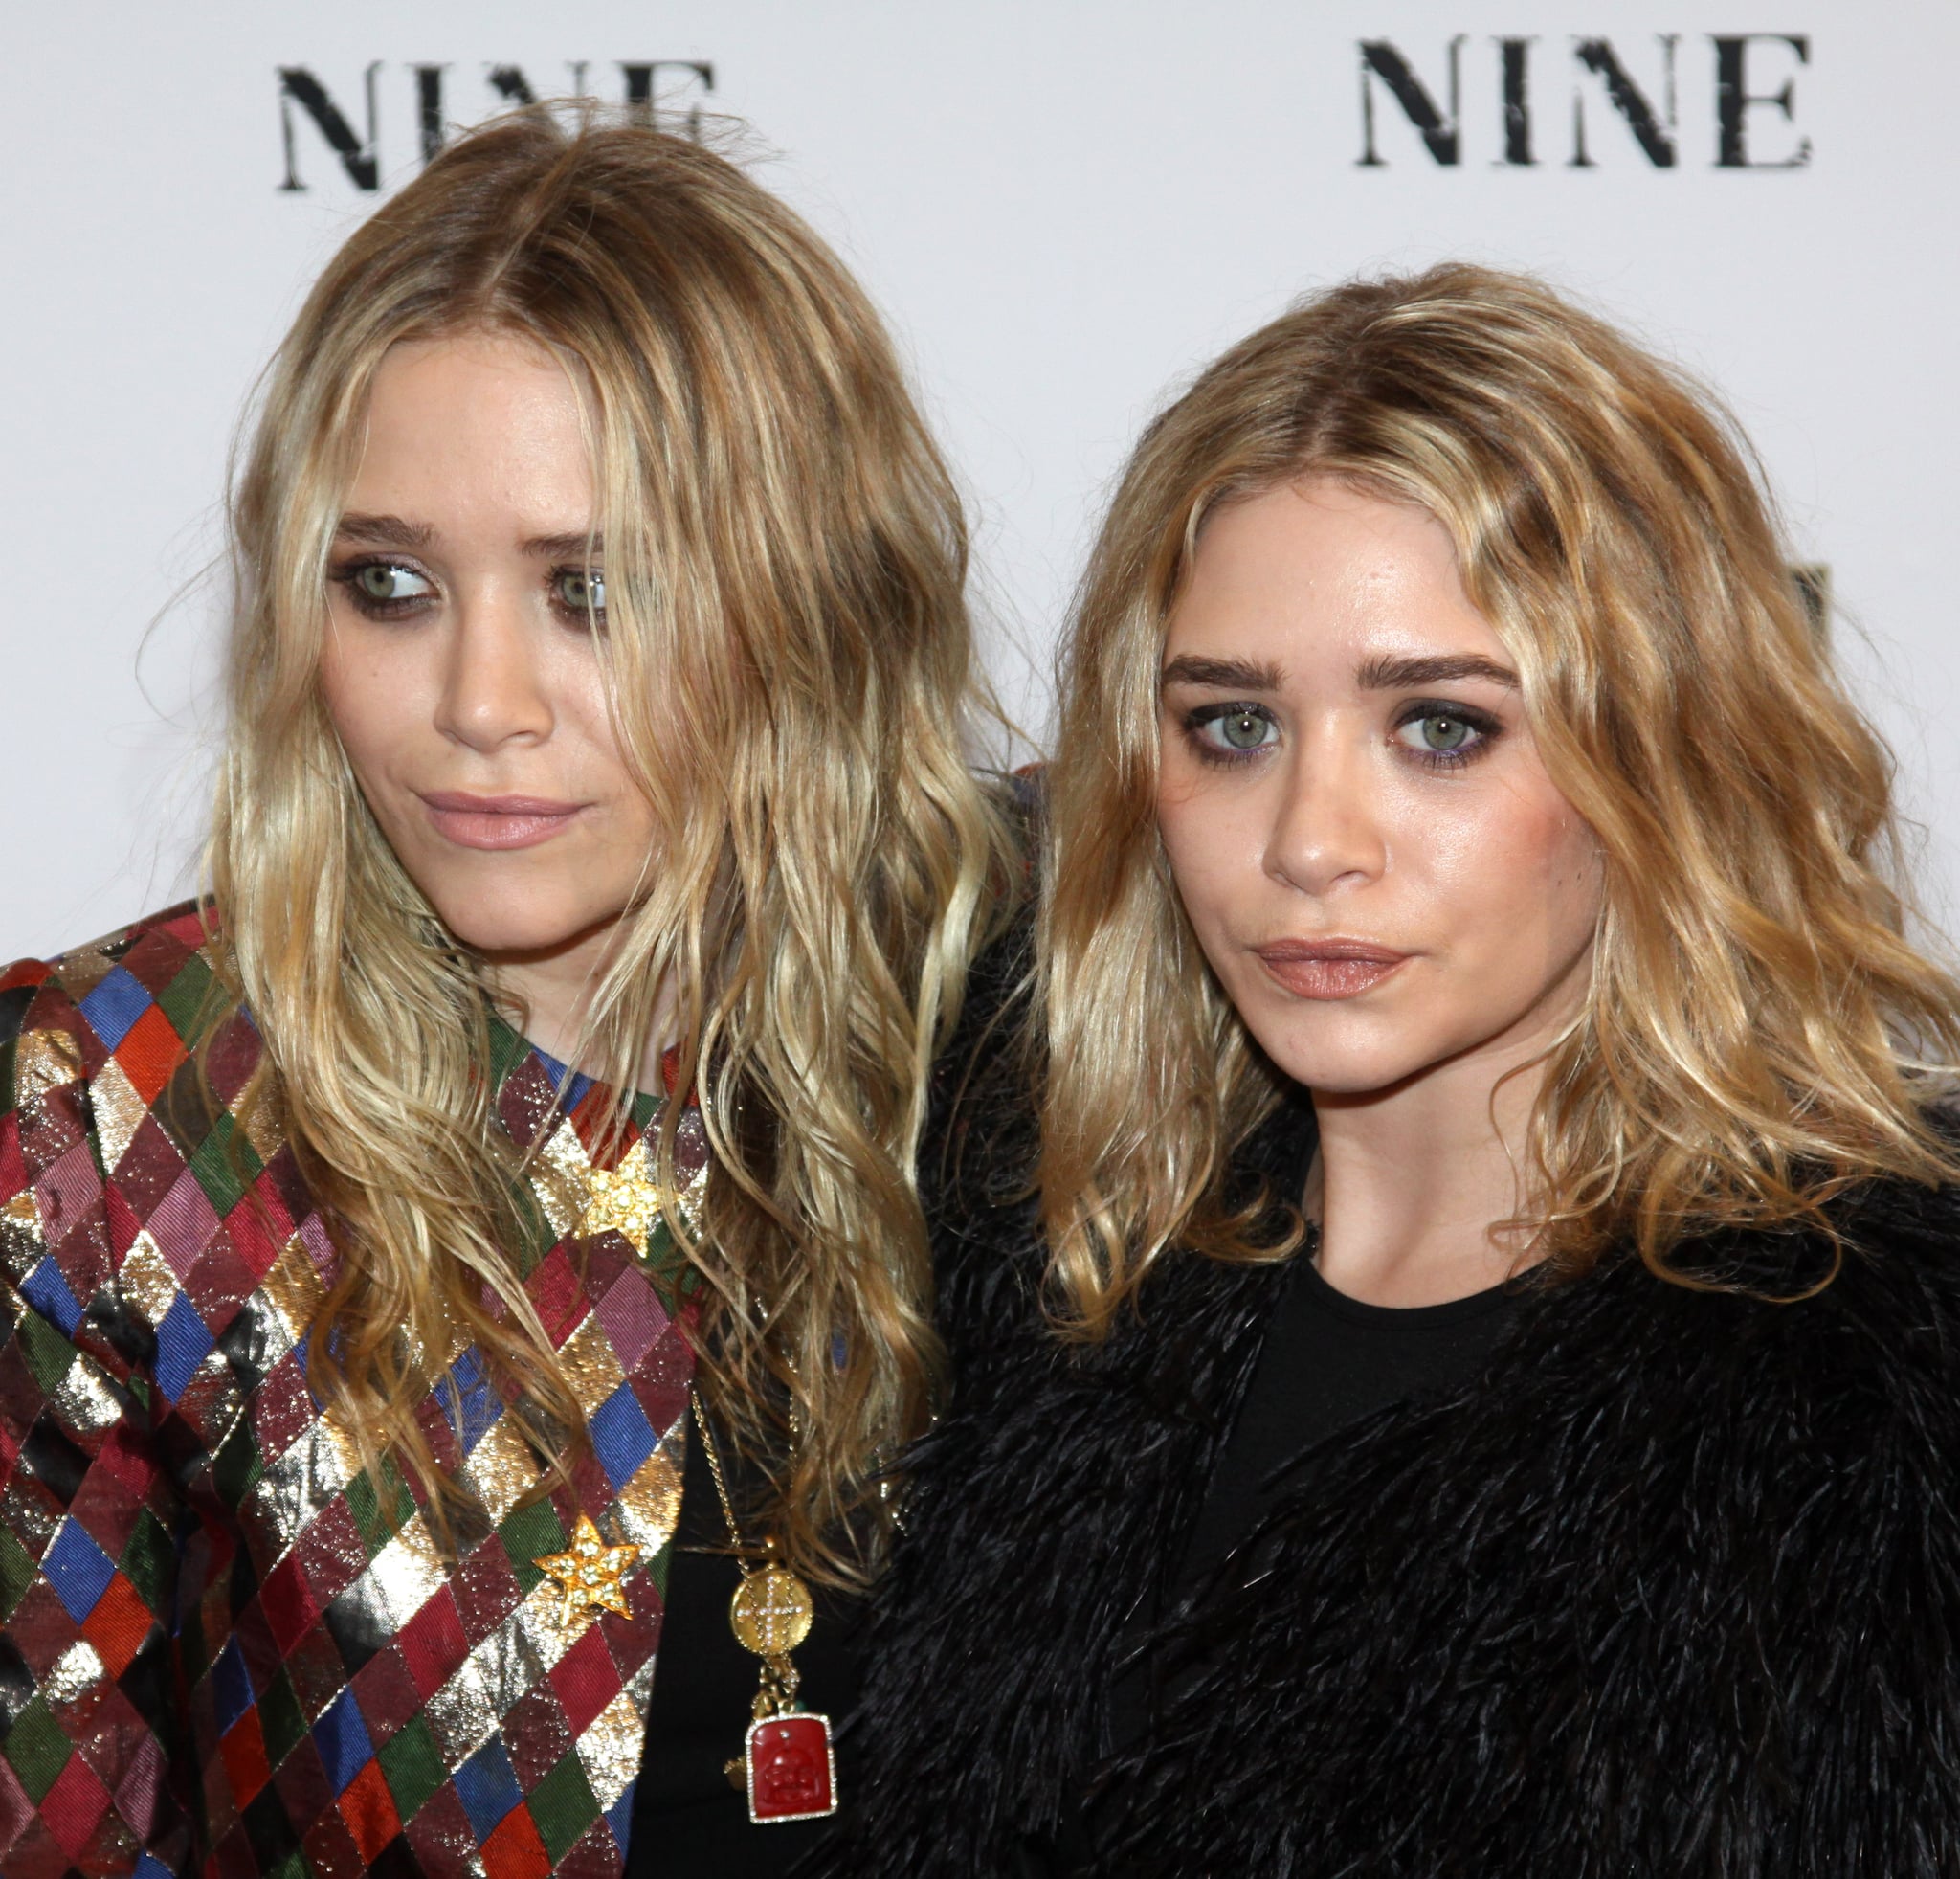 NEW YORK - DECEMBER 15:  Mary-Kate Olsen and Ashley Olsen attend the premiere of 